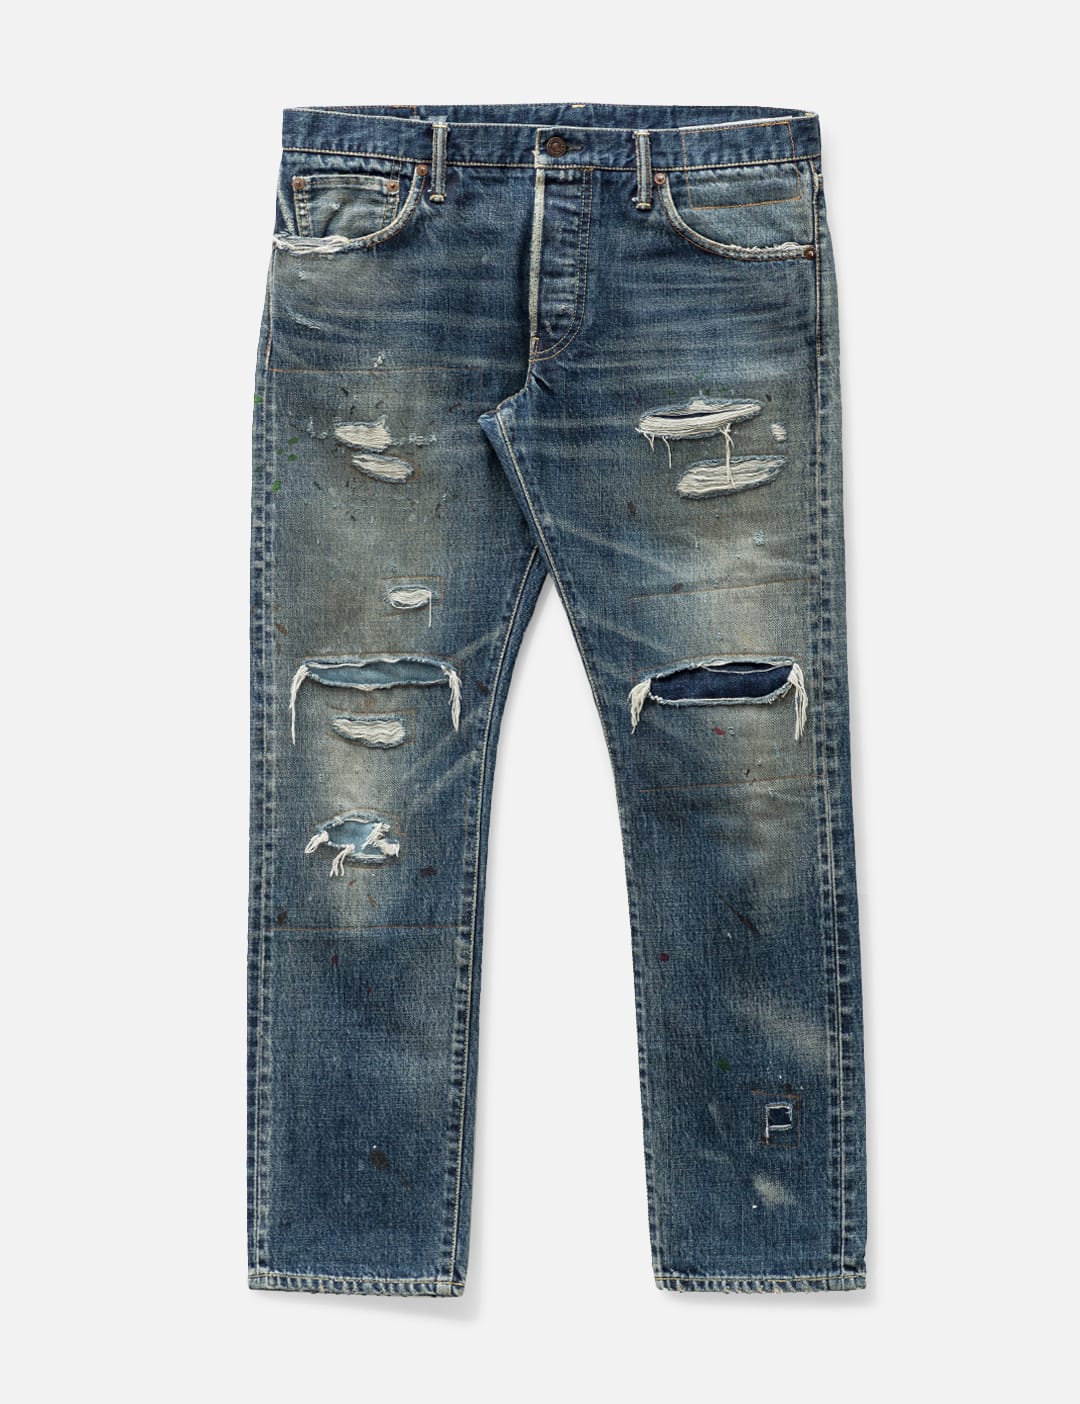 Visvim - Social Sculpture Damaged Jeans | HBX - Globally Curated 